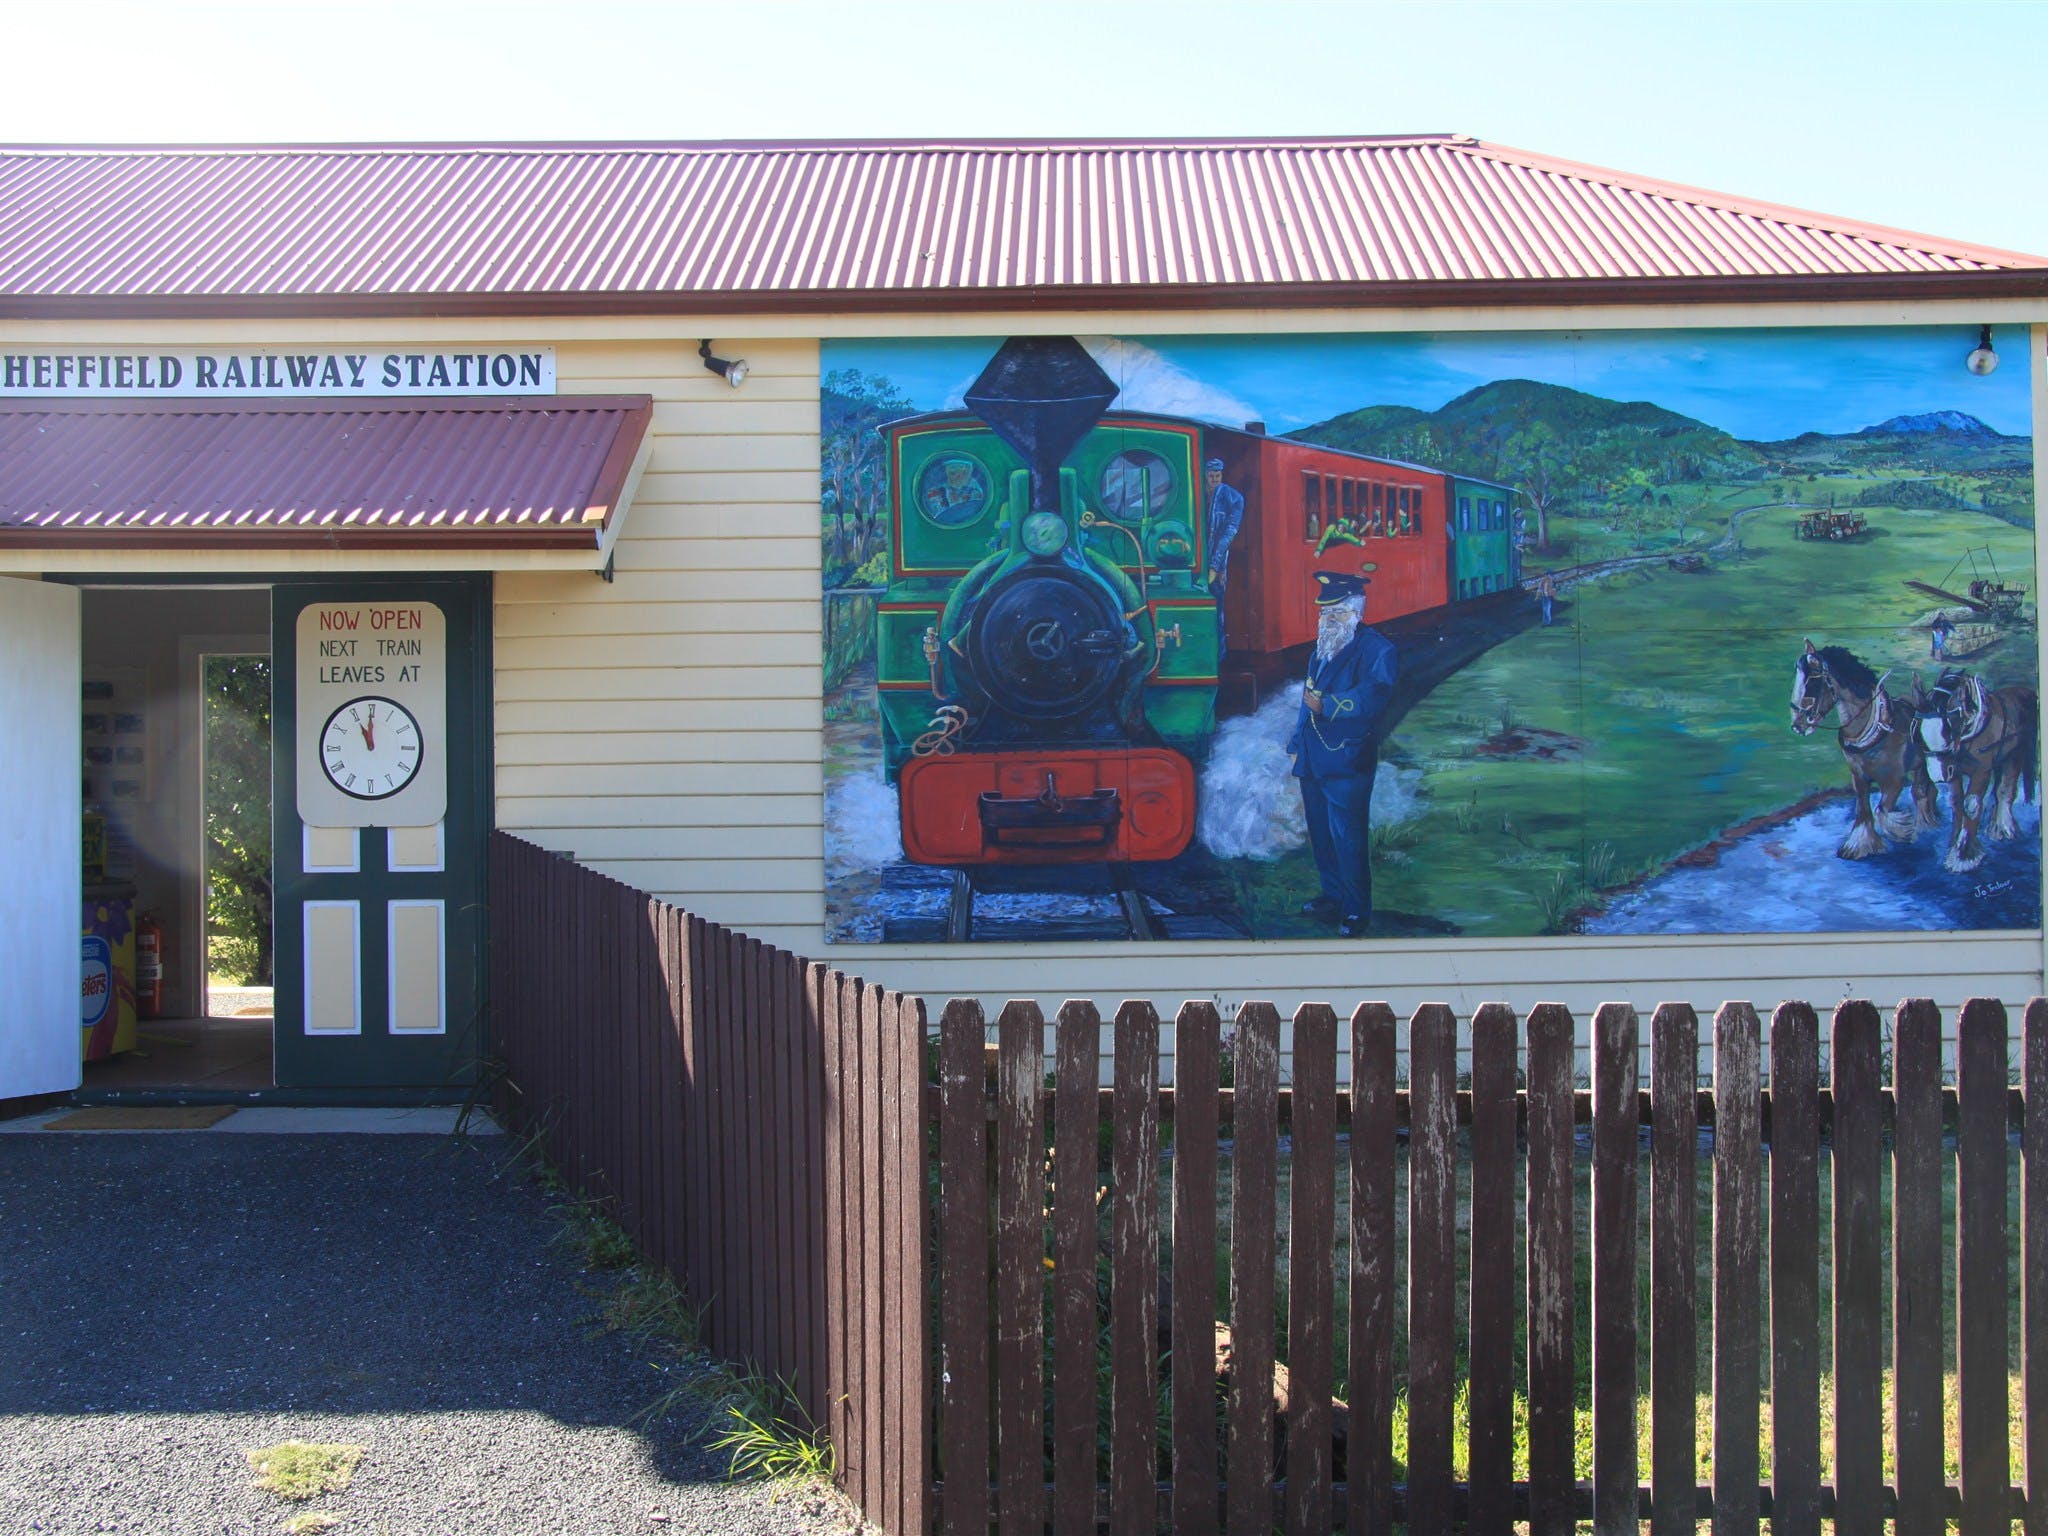 Redwater Creek Railway - Geraldton Accommodation